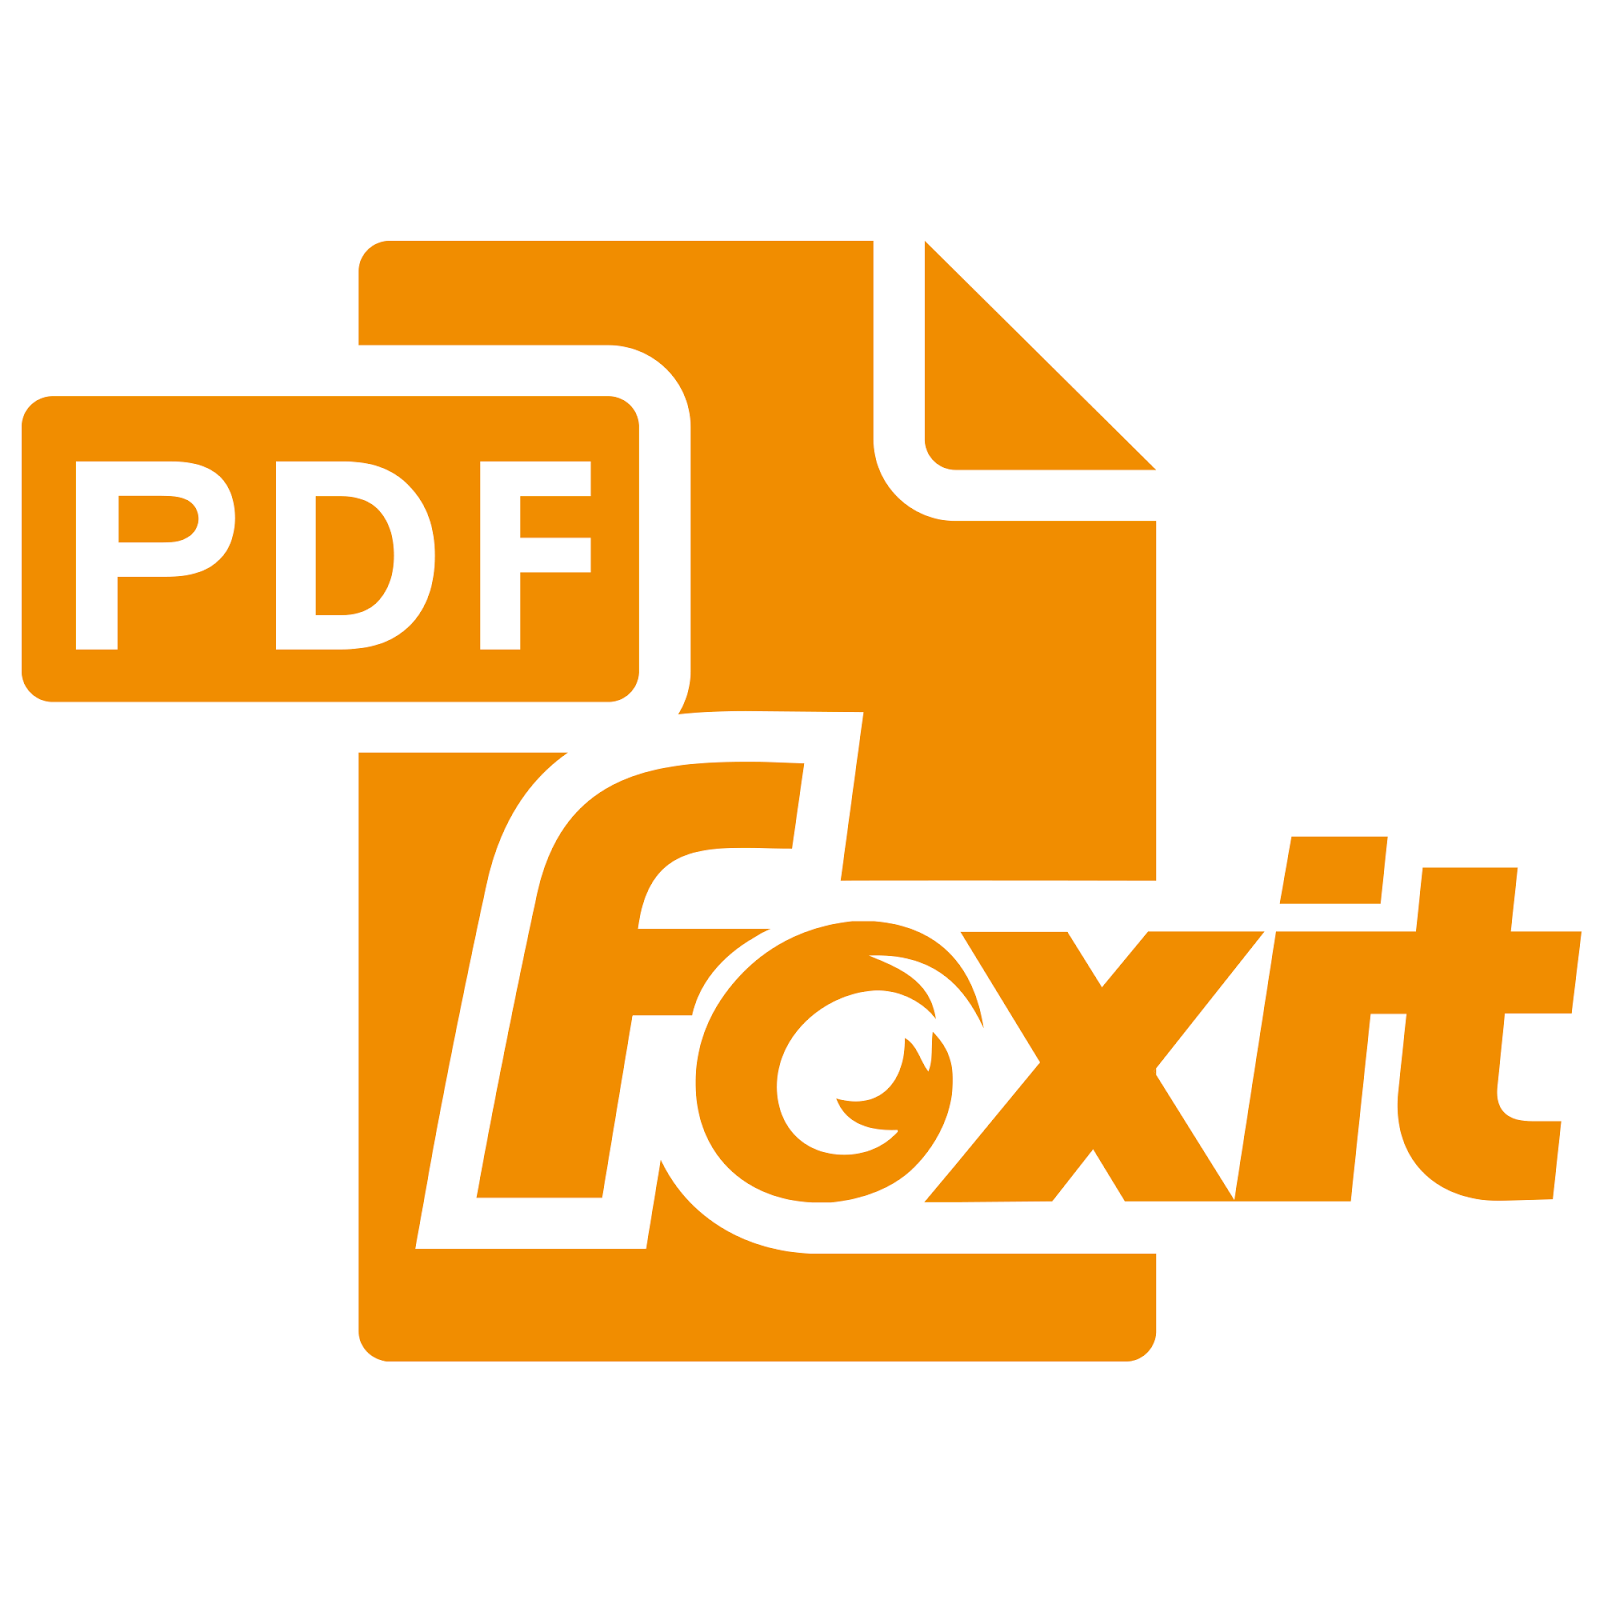 foxit printer driver